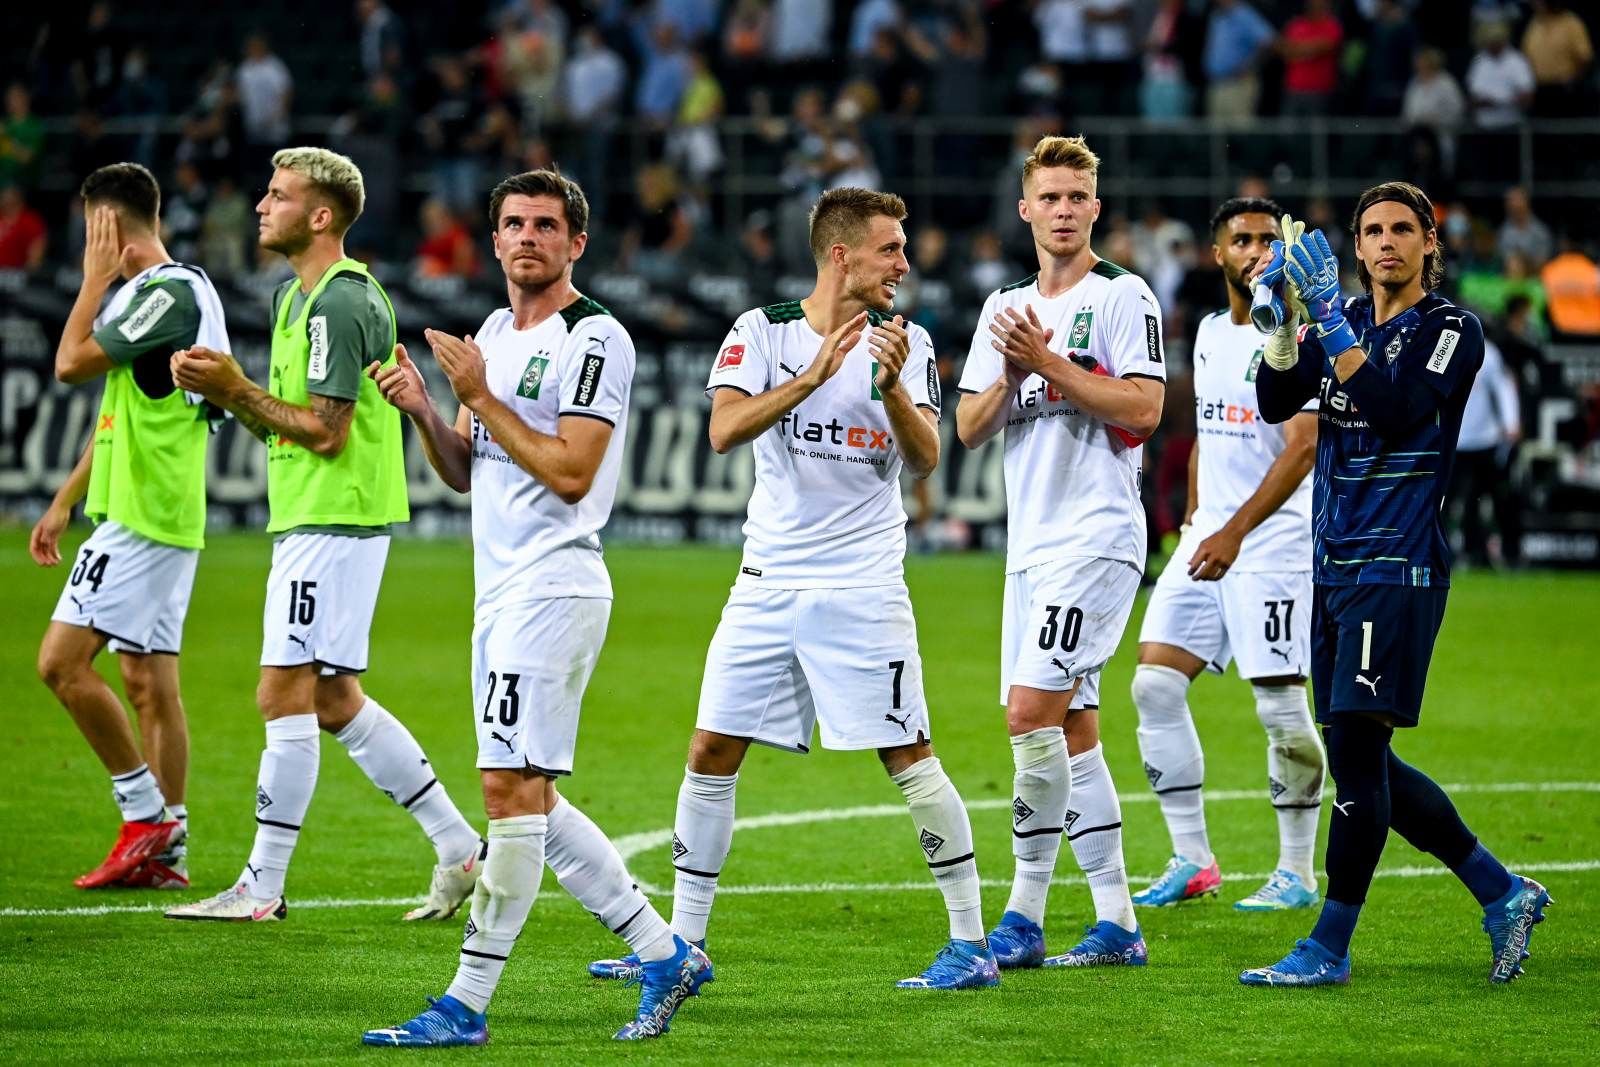 Аугсбург — Боруссия Менхенгладбах прогноз 18 сентября 2021: ставки и коэффициенты на матч Бундеслиги